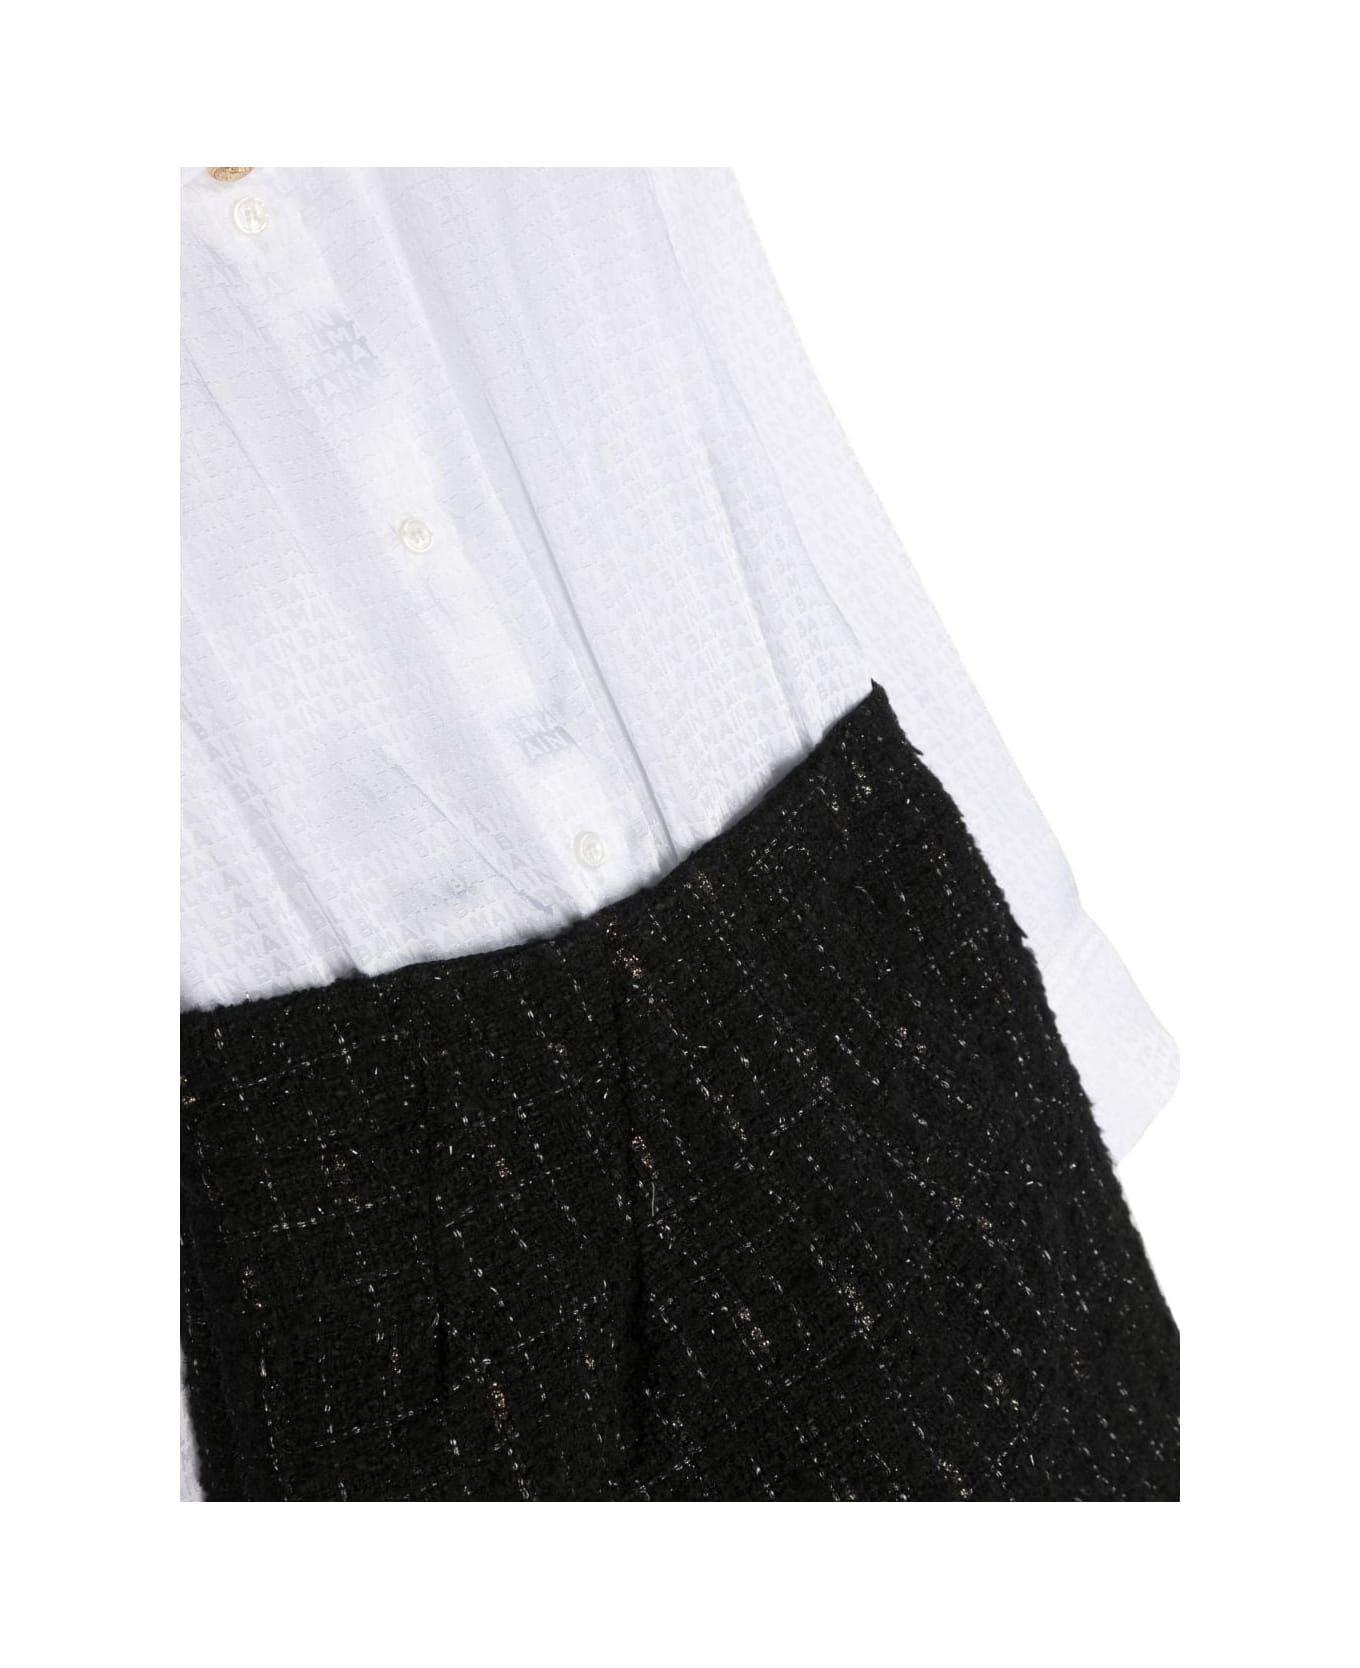 Balmain Black And White Cotton And Tweed Jumpsuit - White/black ジャンプスーツ